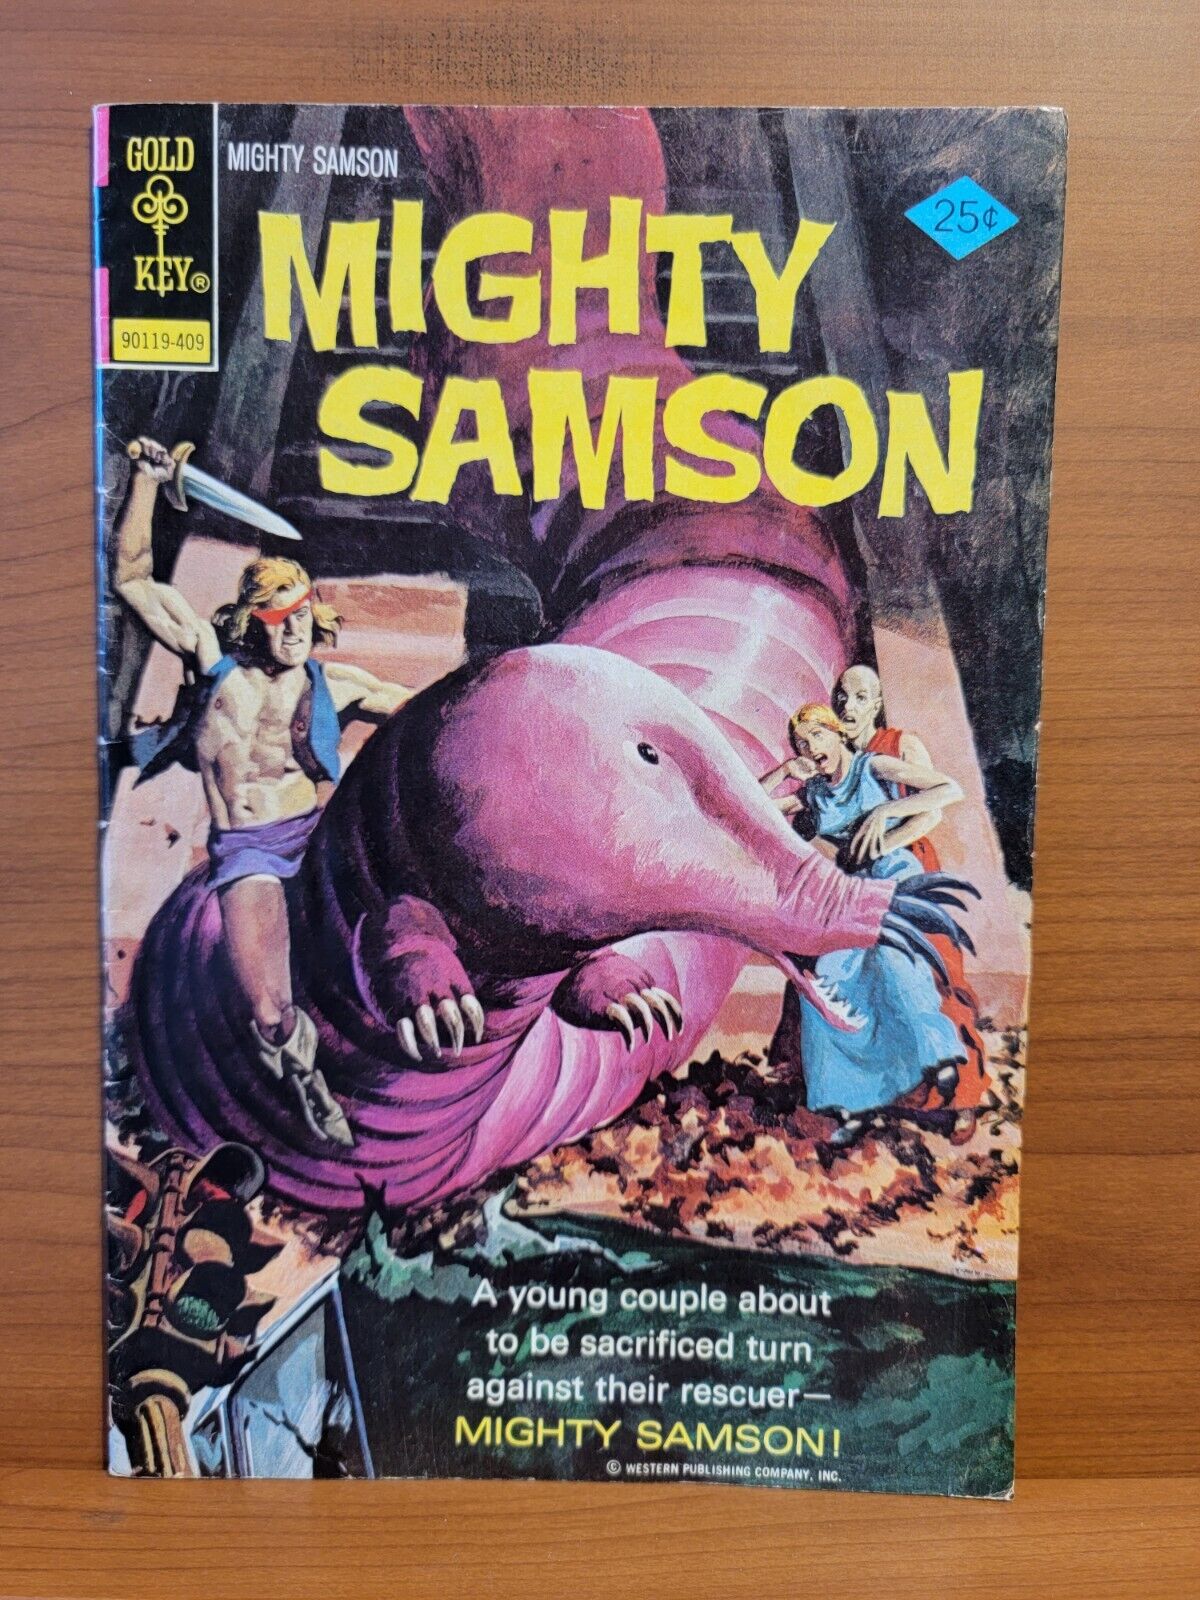 Mighty Samson #25 GD Gold Key 1974